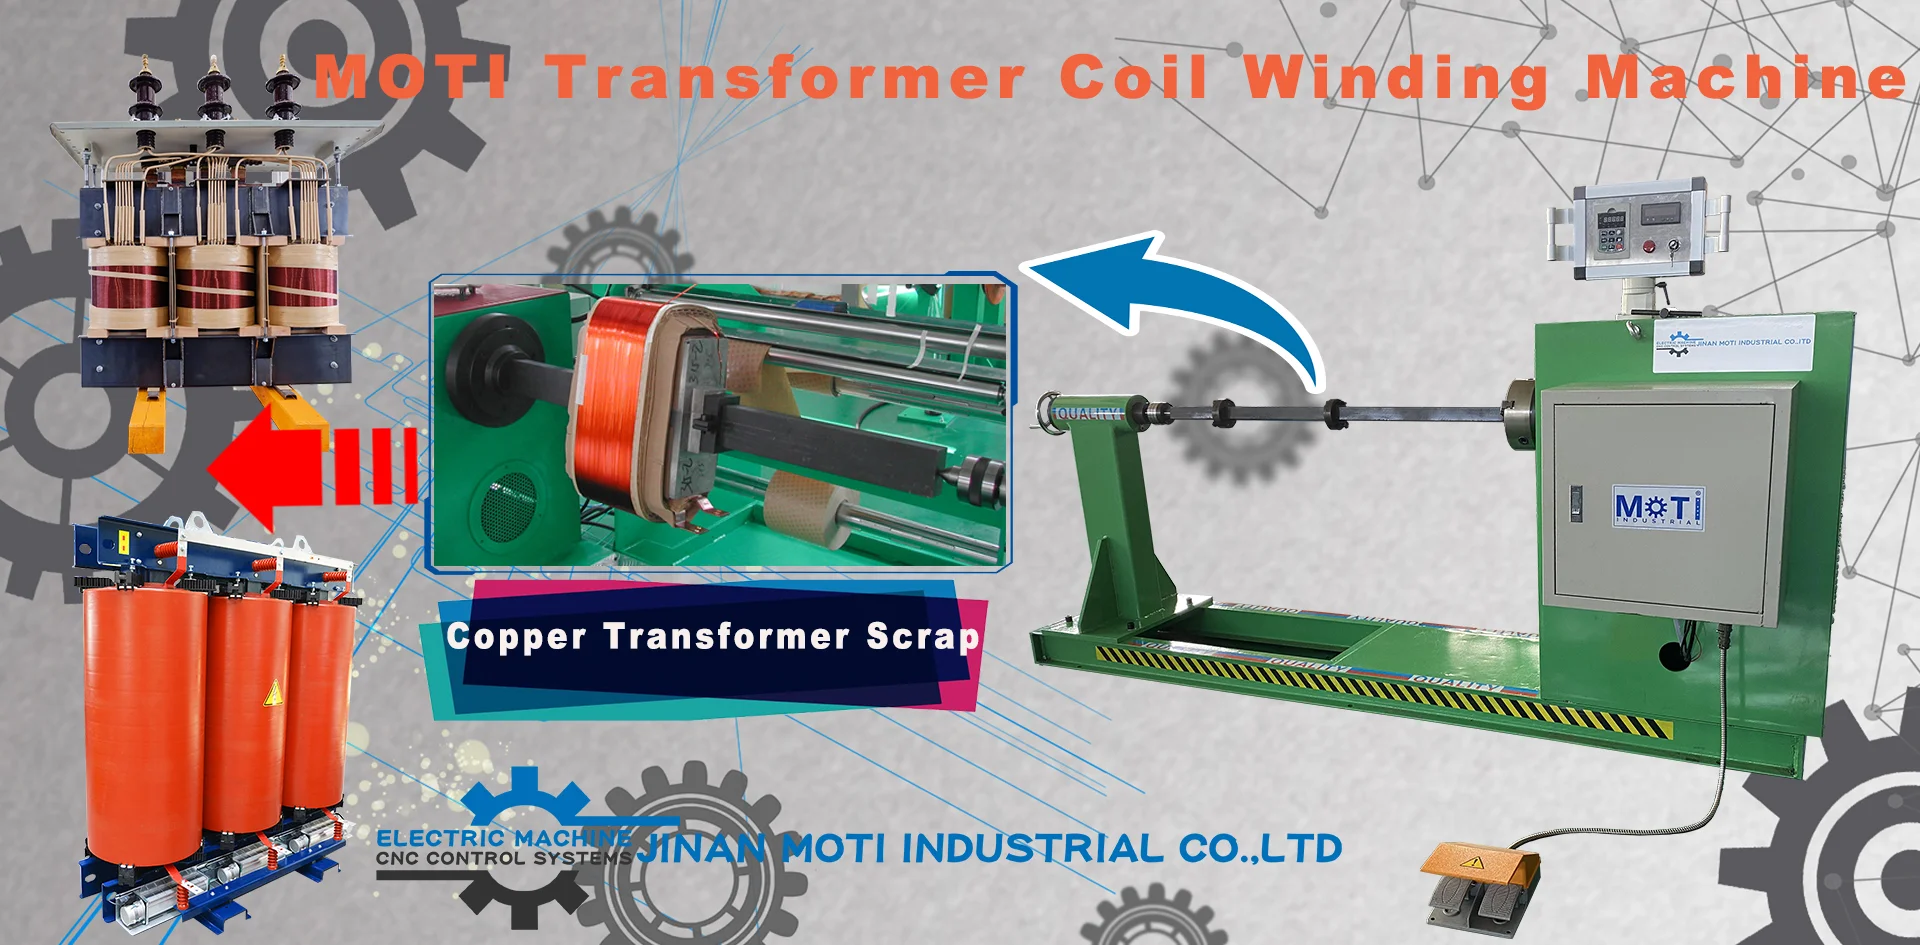 transformer coil winding machine-20210713